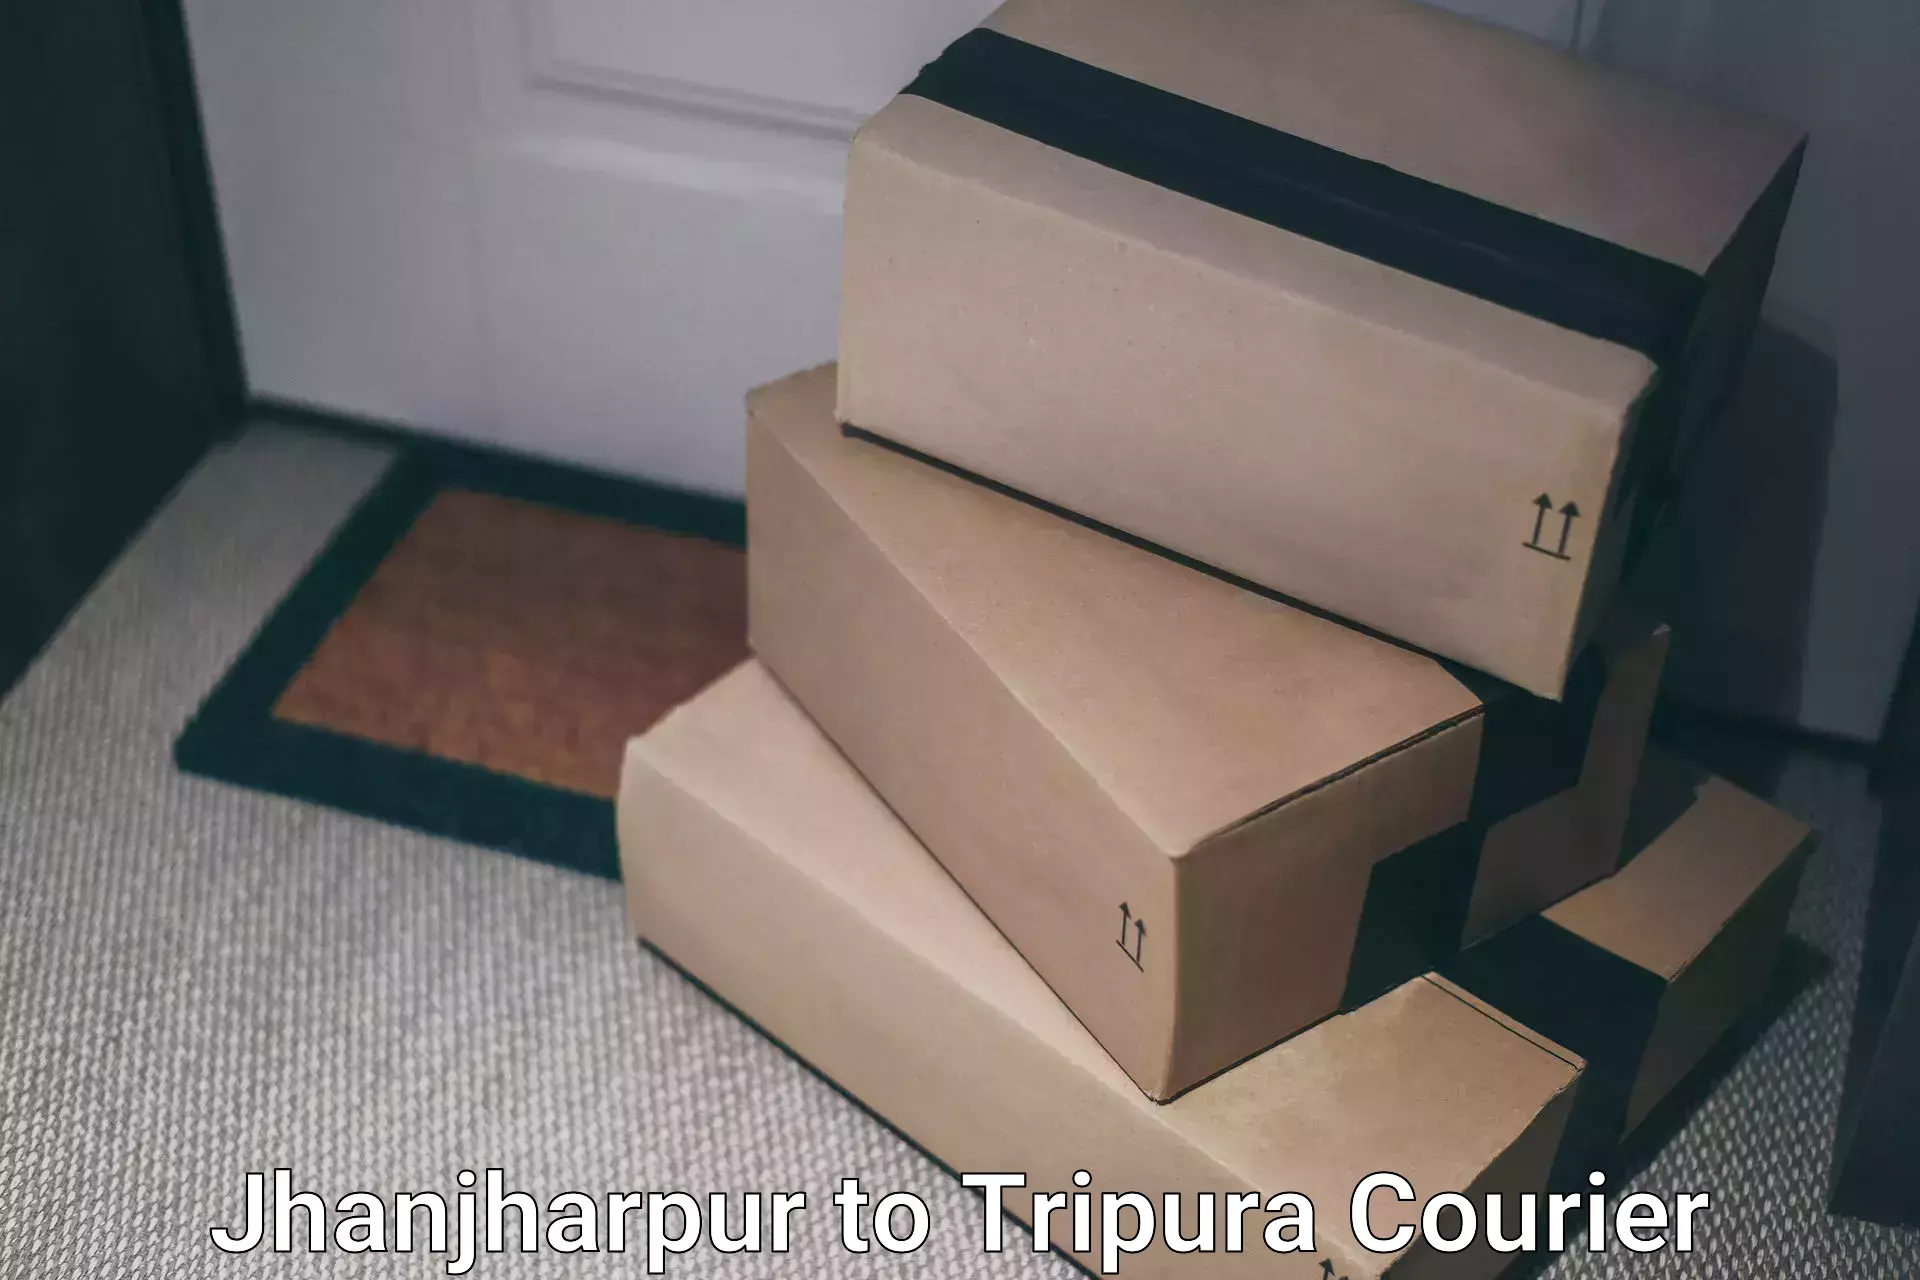 On-demand courier Jhanjharpur to Udaipur Tripura